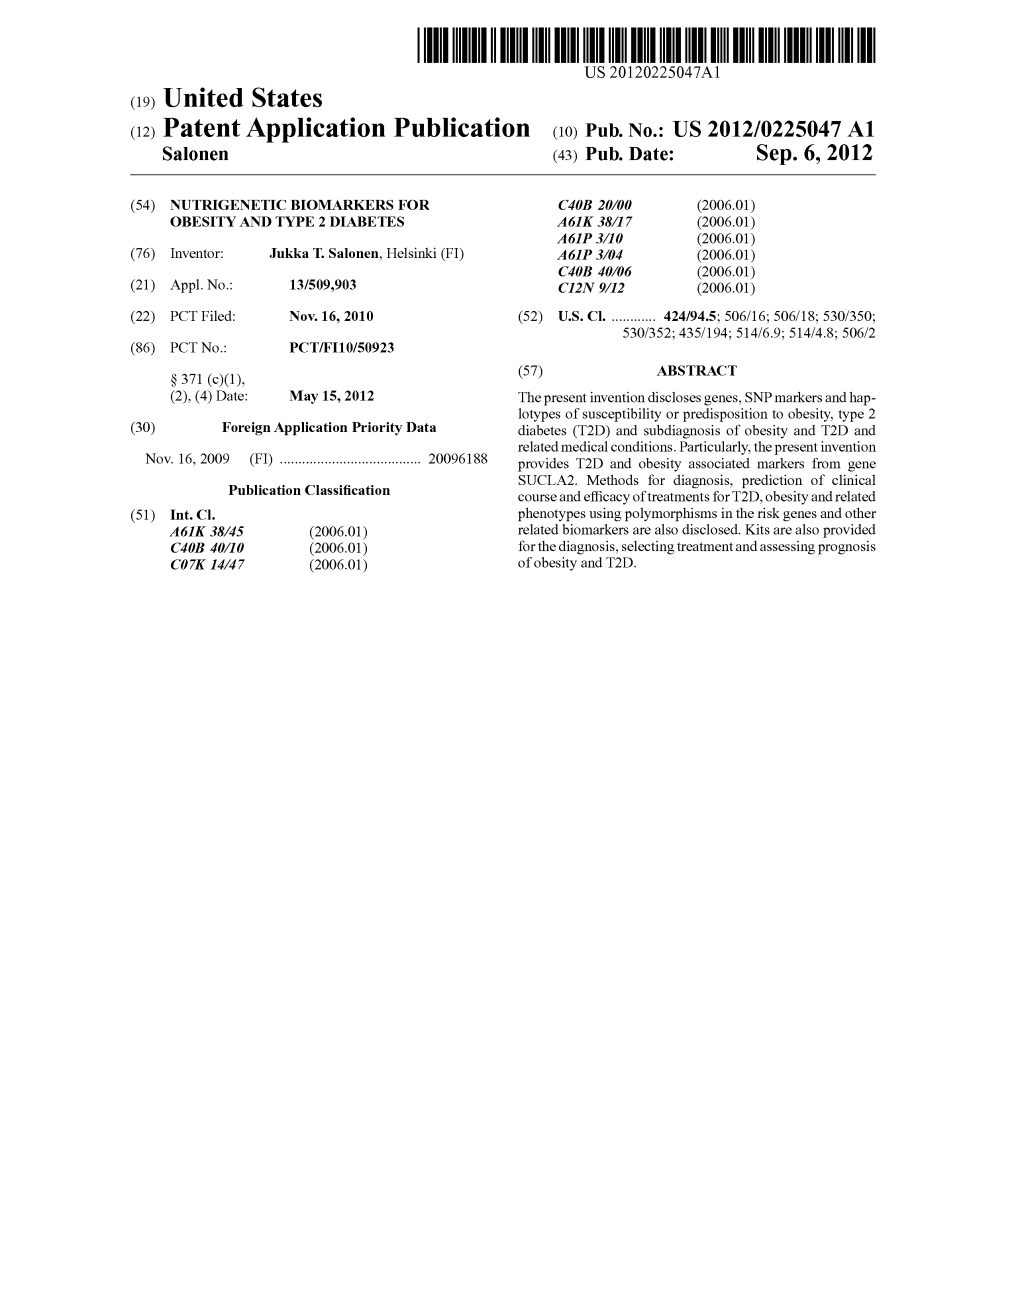 (12) Patent Application Publication (10) Pub. No.: US 2012/0225047 A1 Salonen (43) Pub